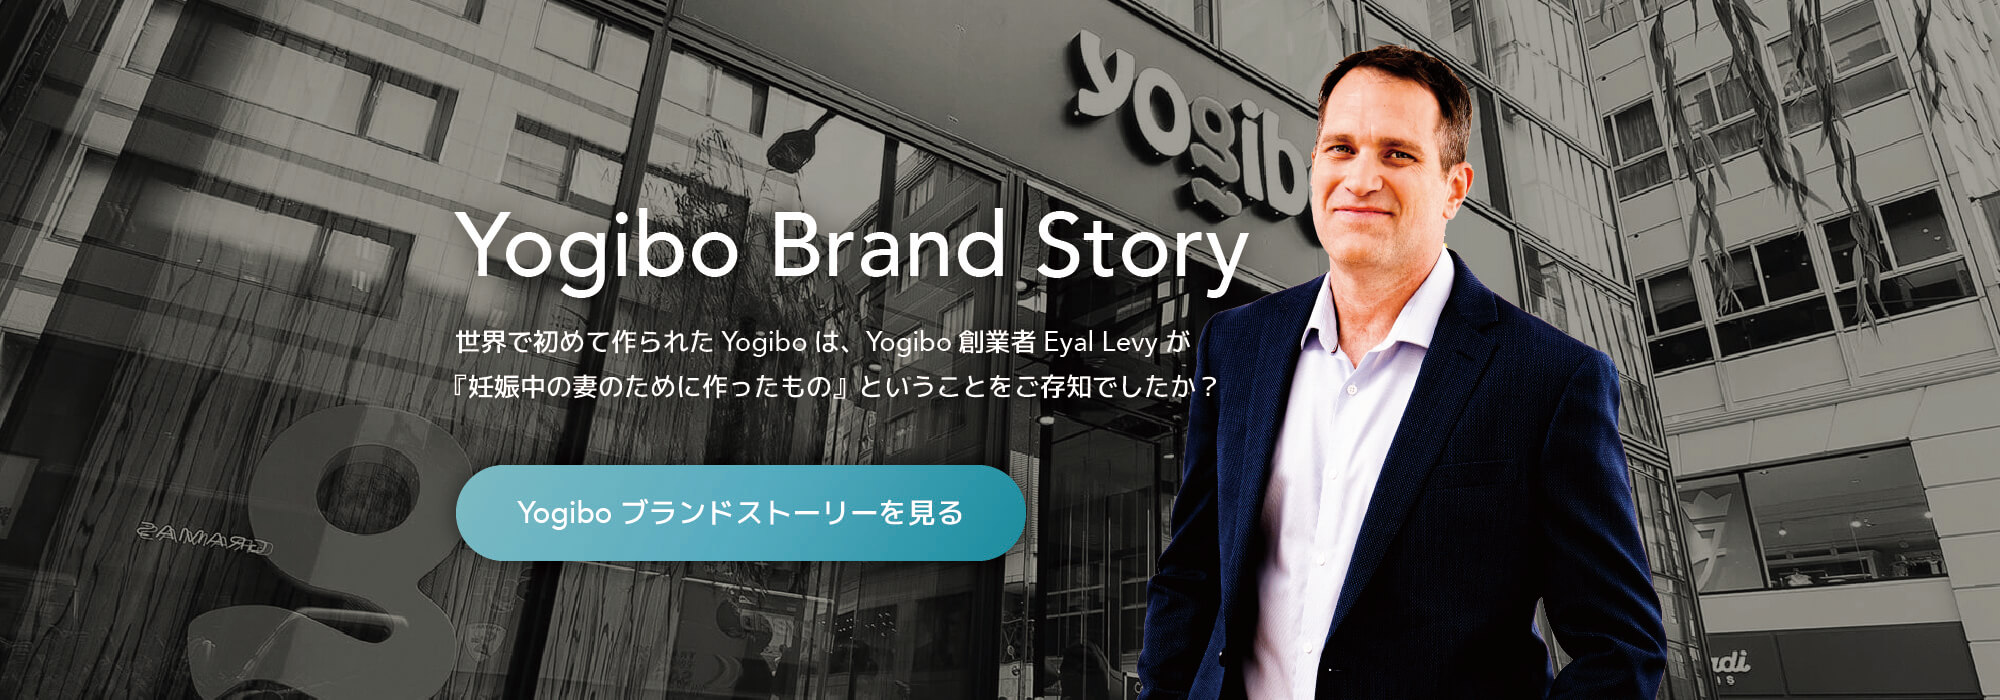 Yogibo Brand Story